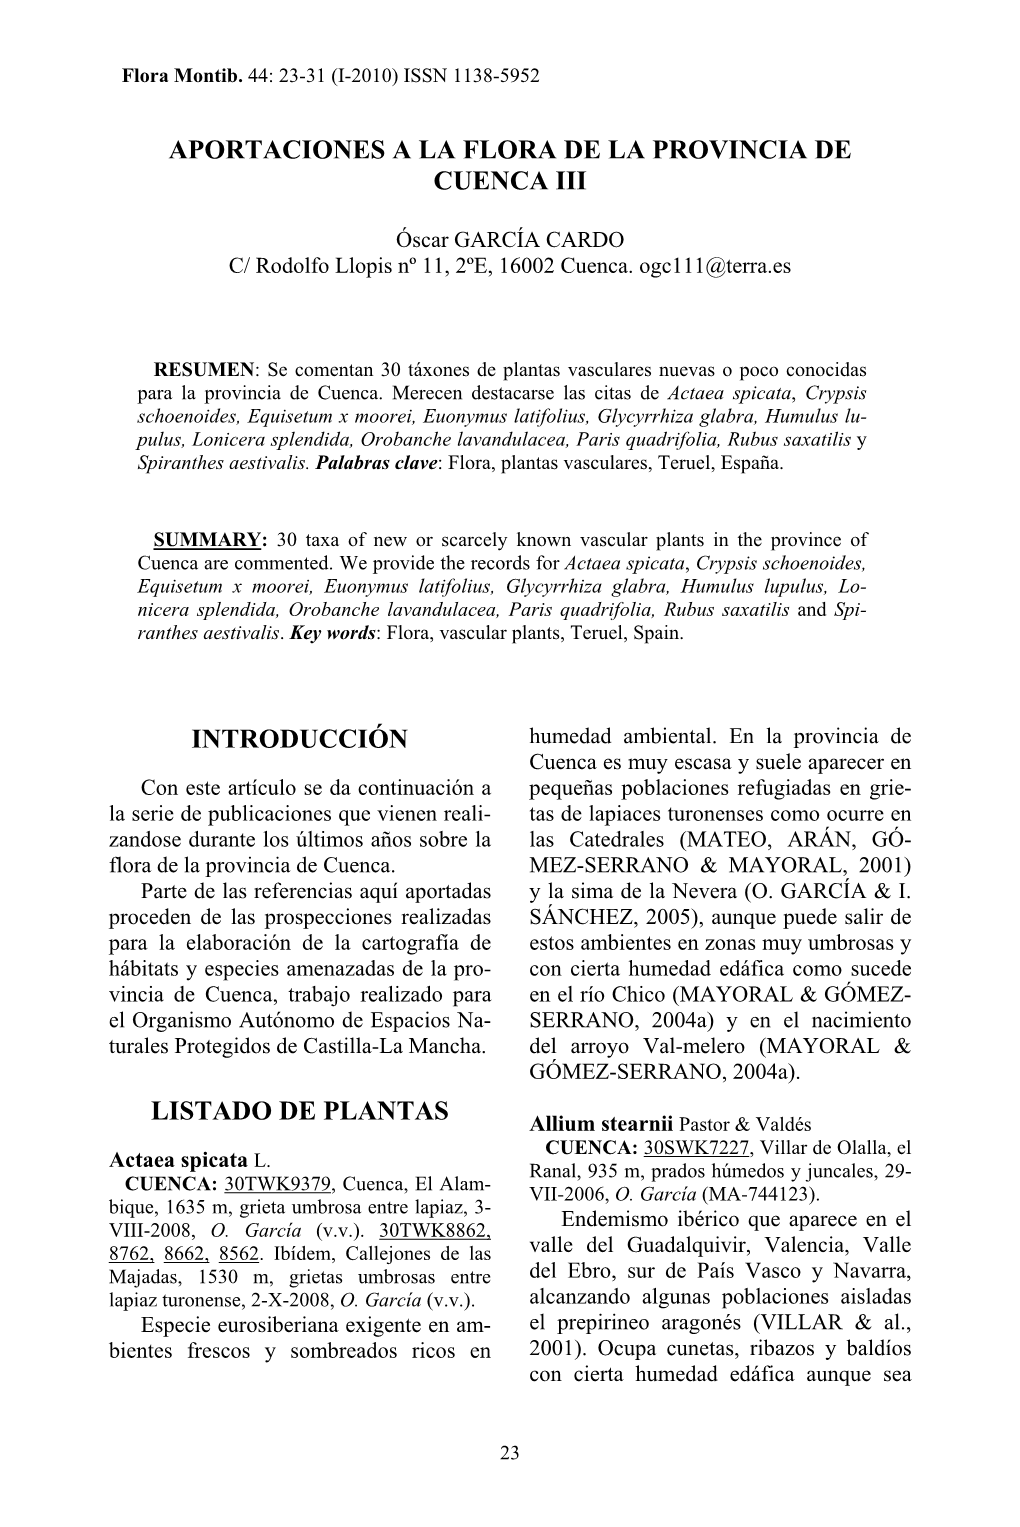 Flora Montiberica, Vol. 44. Valencia, 22-XII-2009